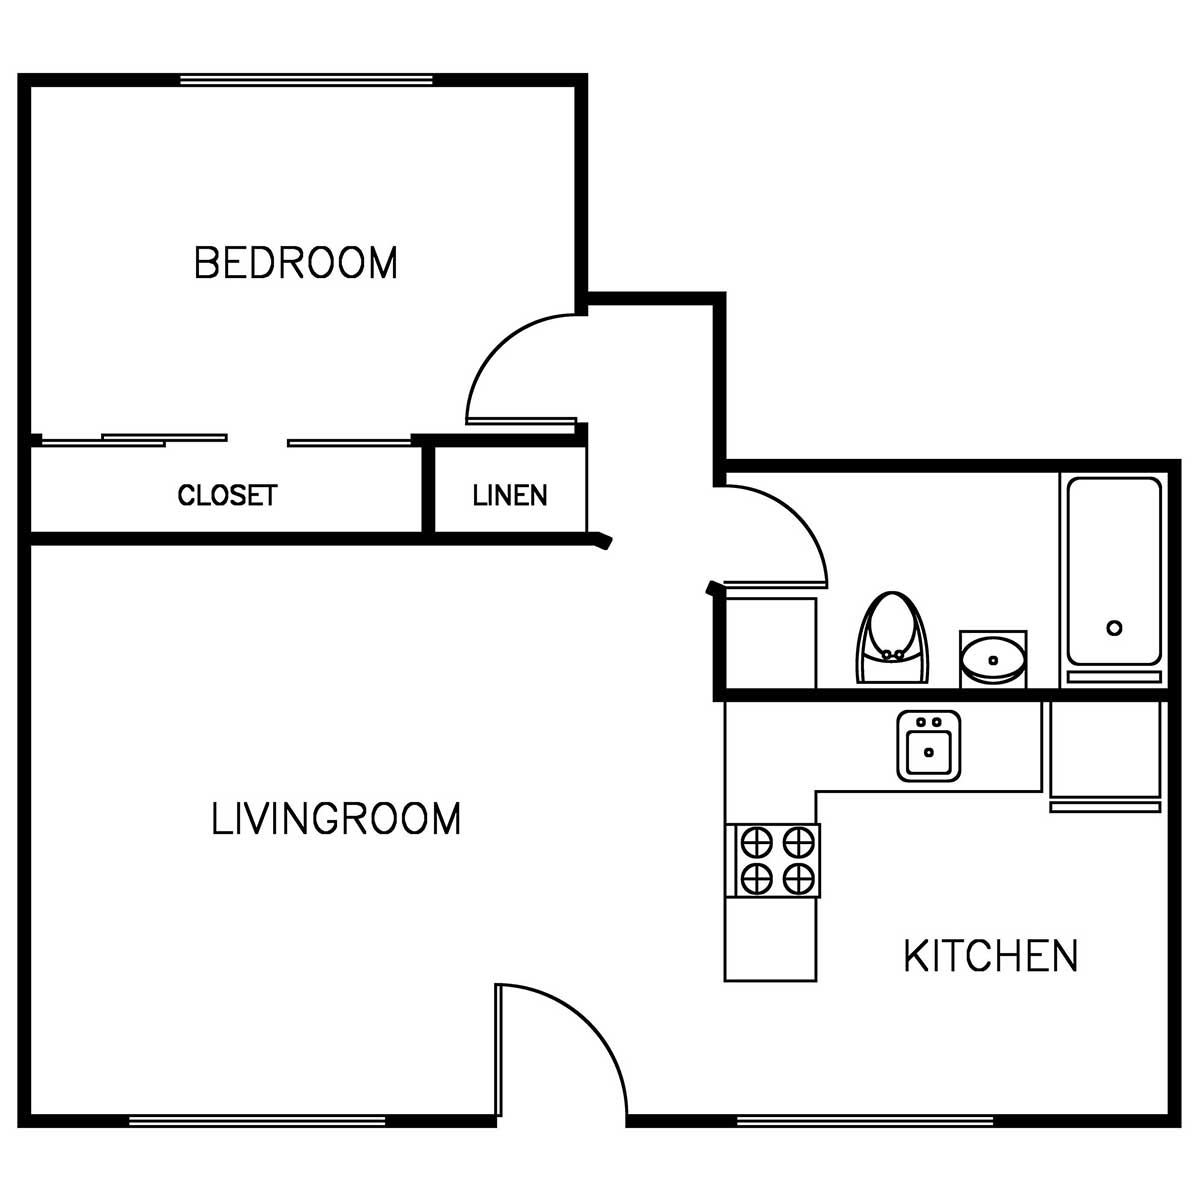 1 bedroom 1 bathroom floor plan layout